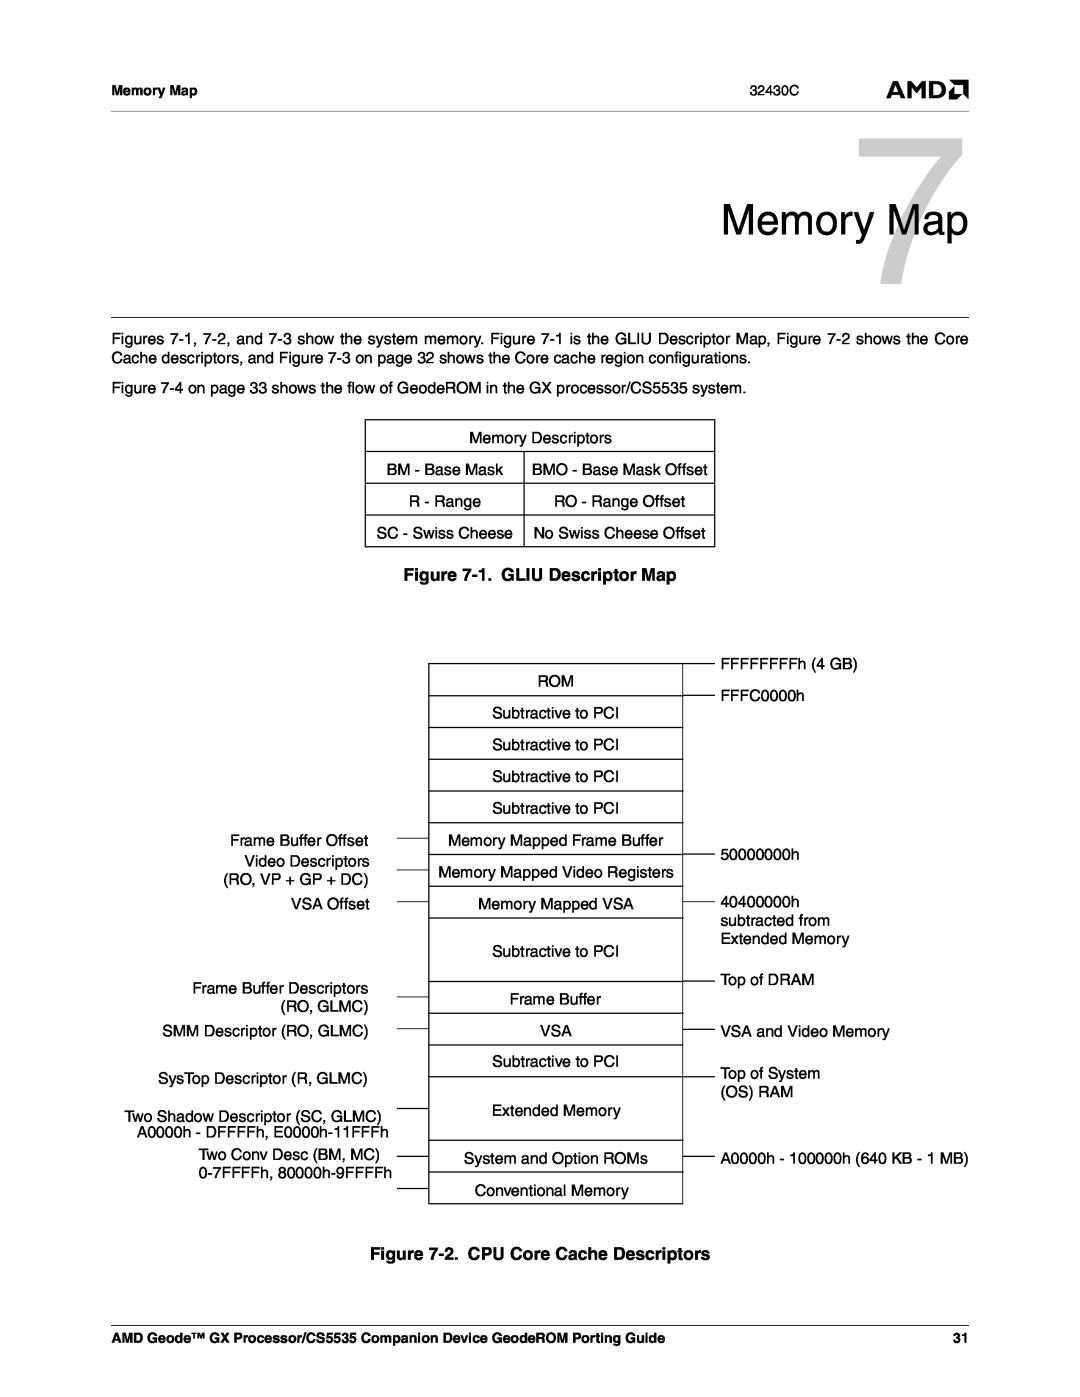 AMD CS5535 manual Memory7Map, 1. GLIU Descriptor Map, 2. CPU Core Cache Descriptors 